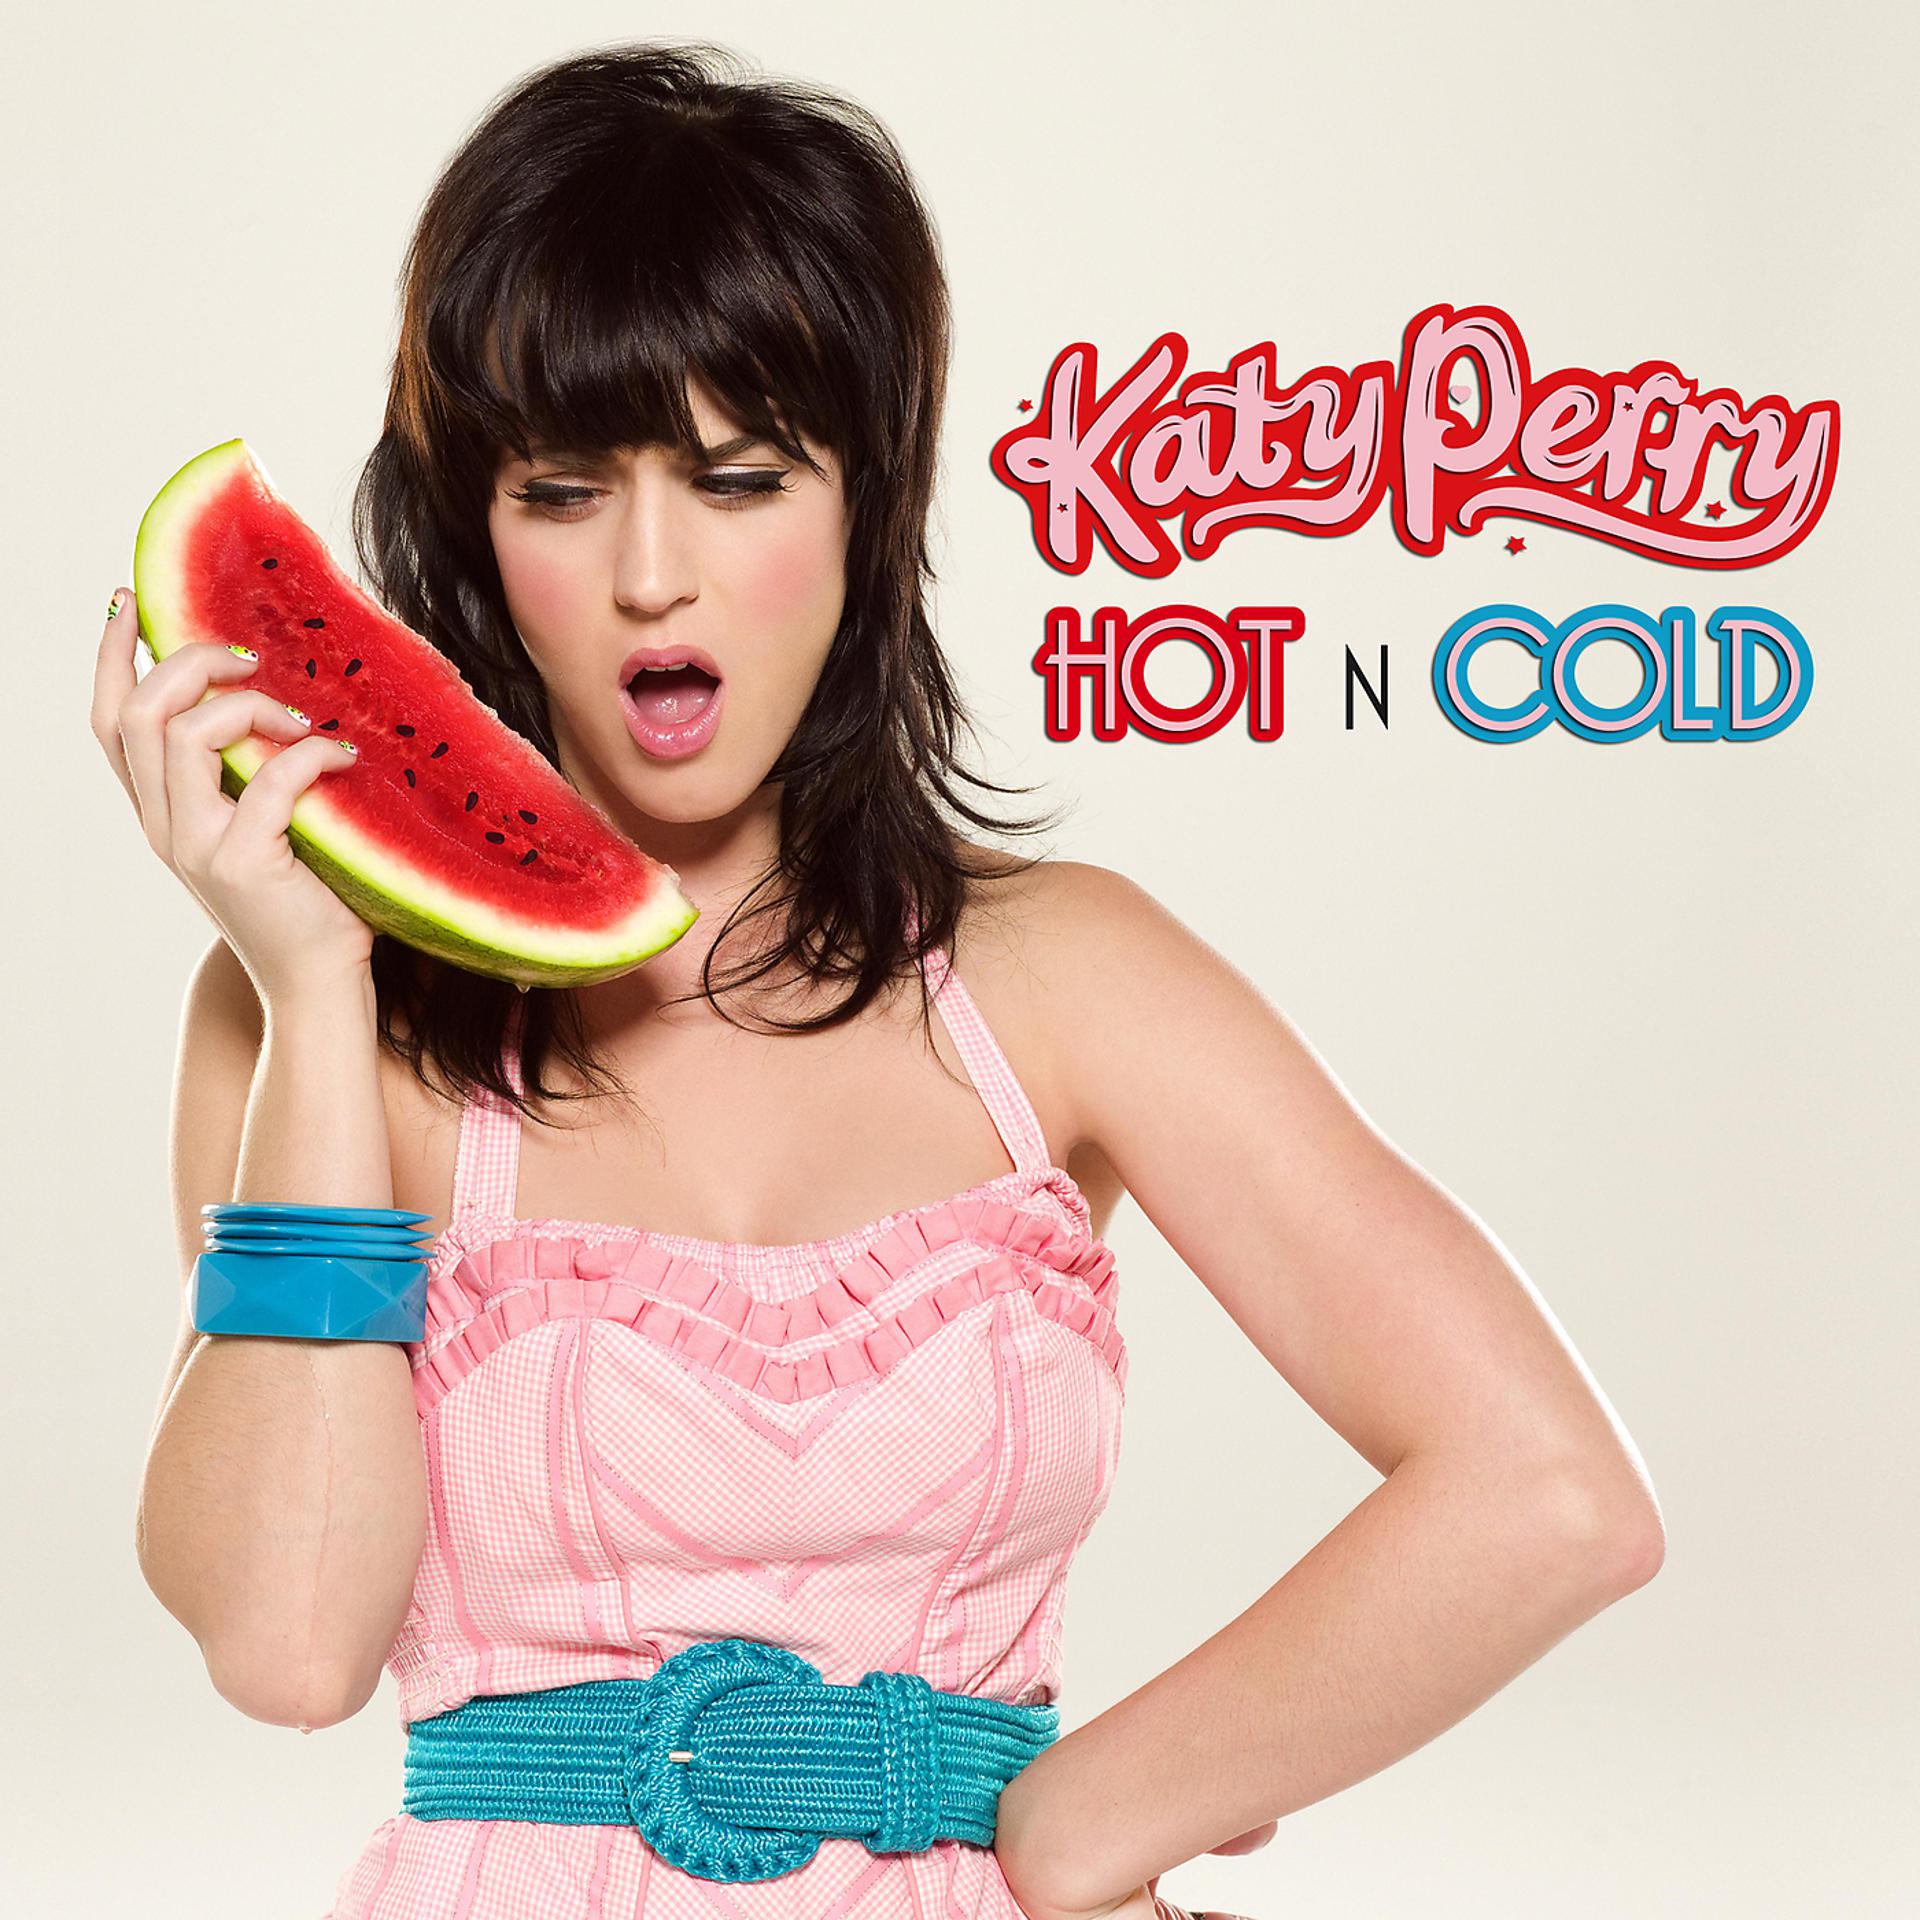 Хот энд колд. Hot n Cold Кэти Перри. Katy Perry hot n Cold обложка. Кэти Перри 2008. Katy Perry обложка hot.